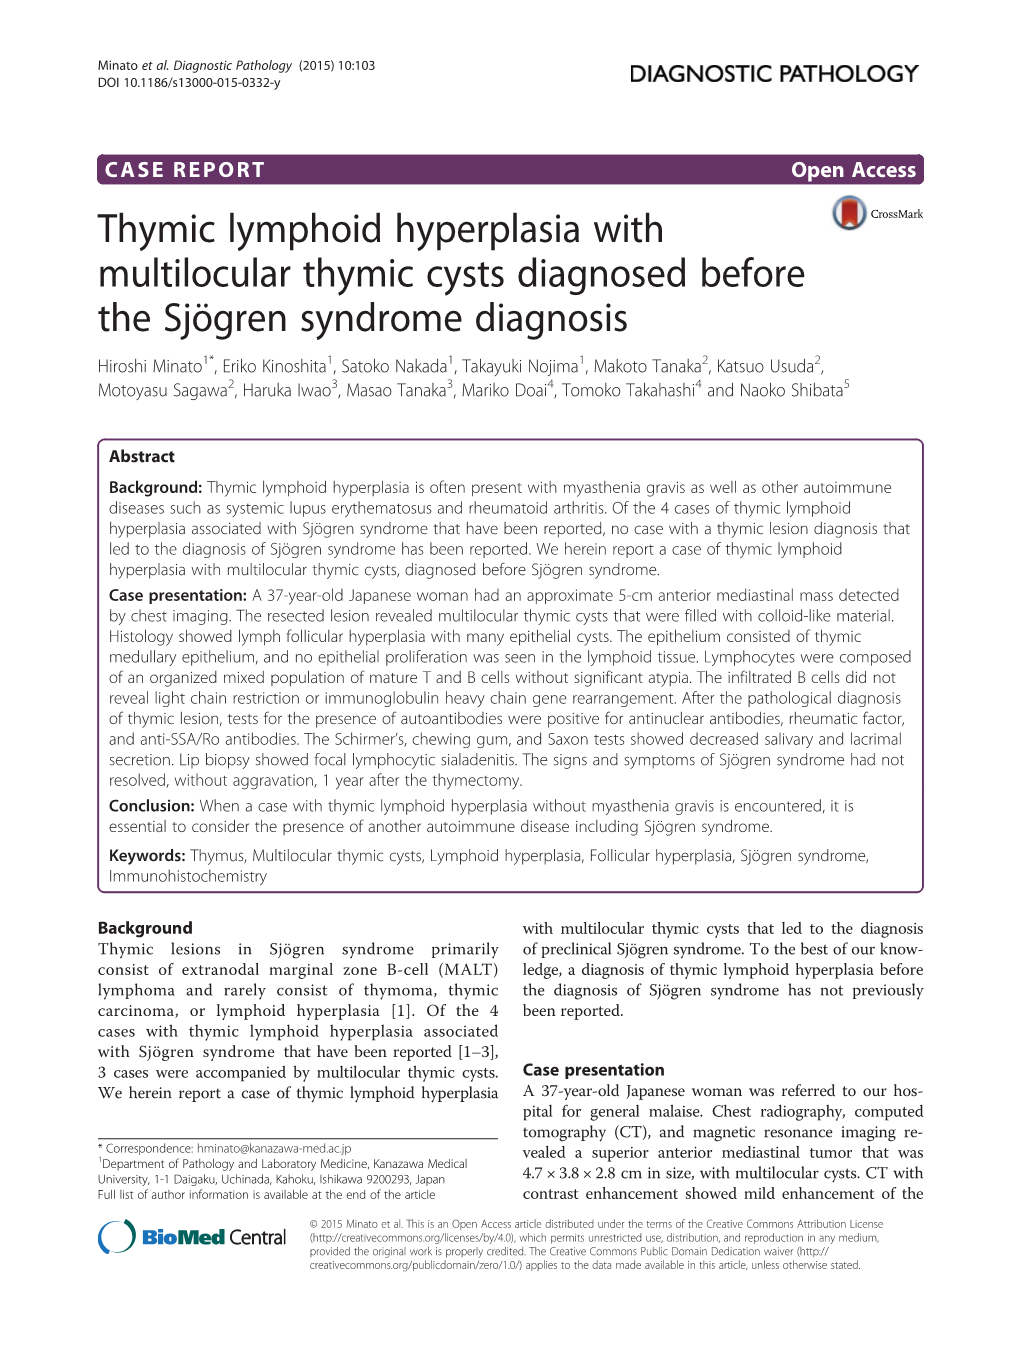 Thymic Lymphoid Hyperplasia with Multilocular Thymic Cysts Diagnosed